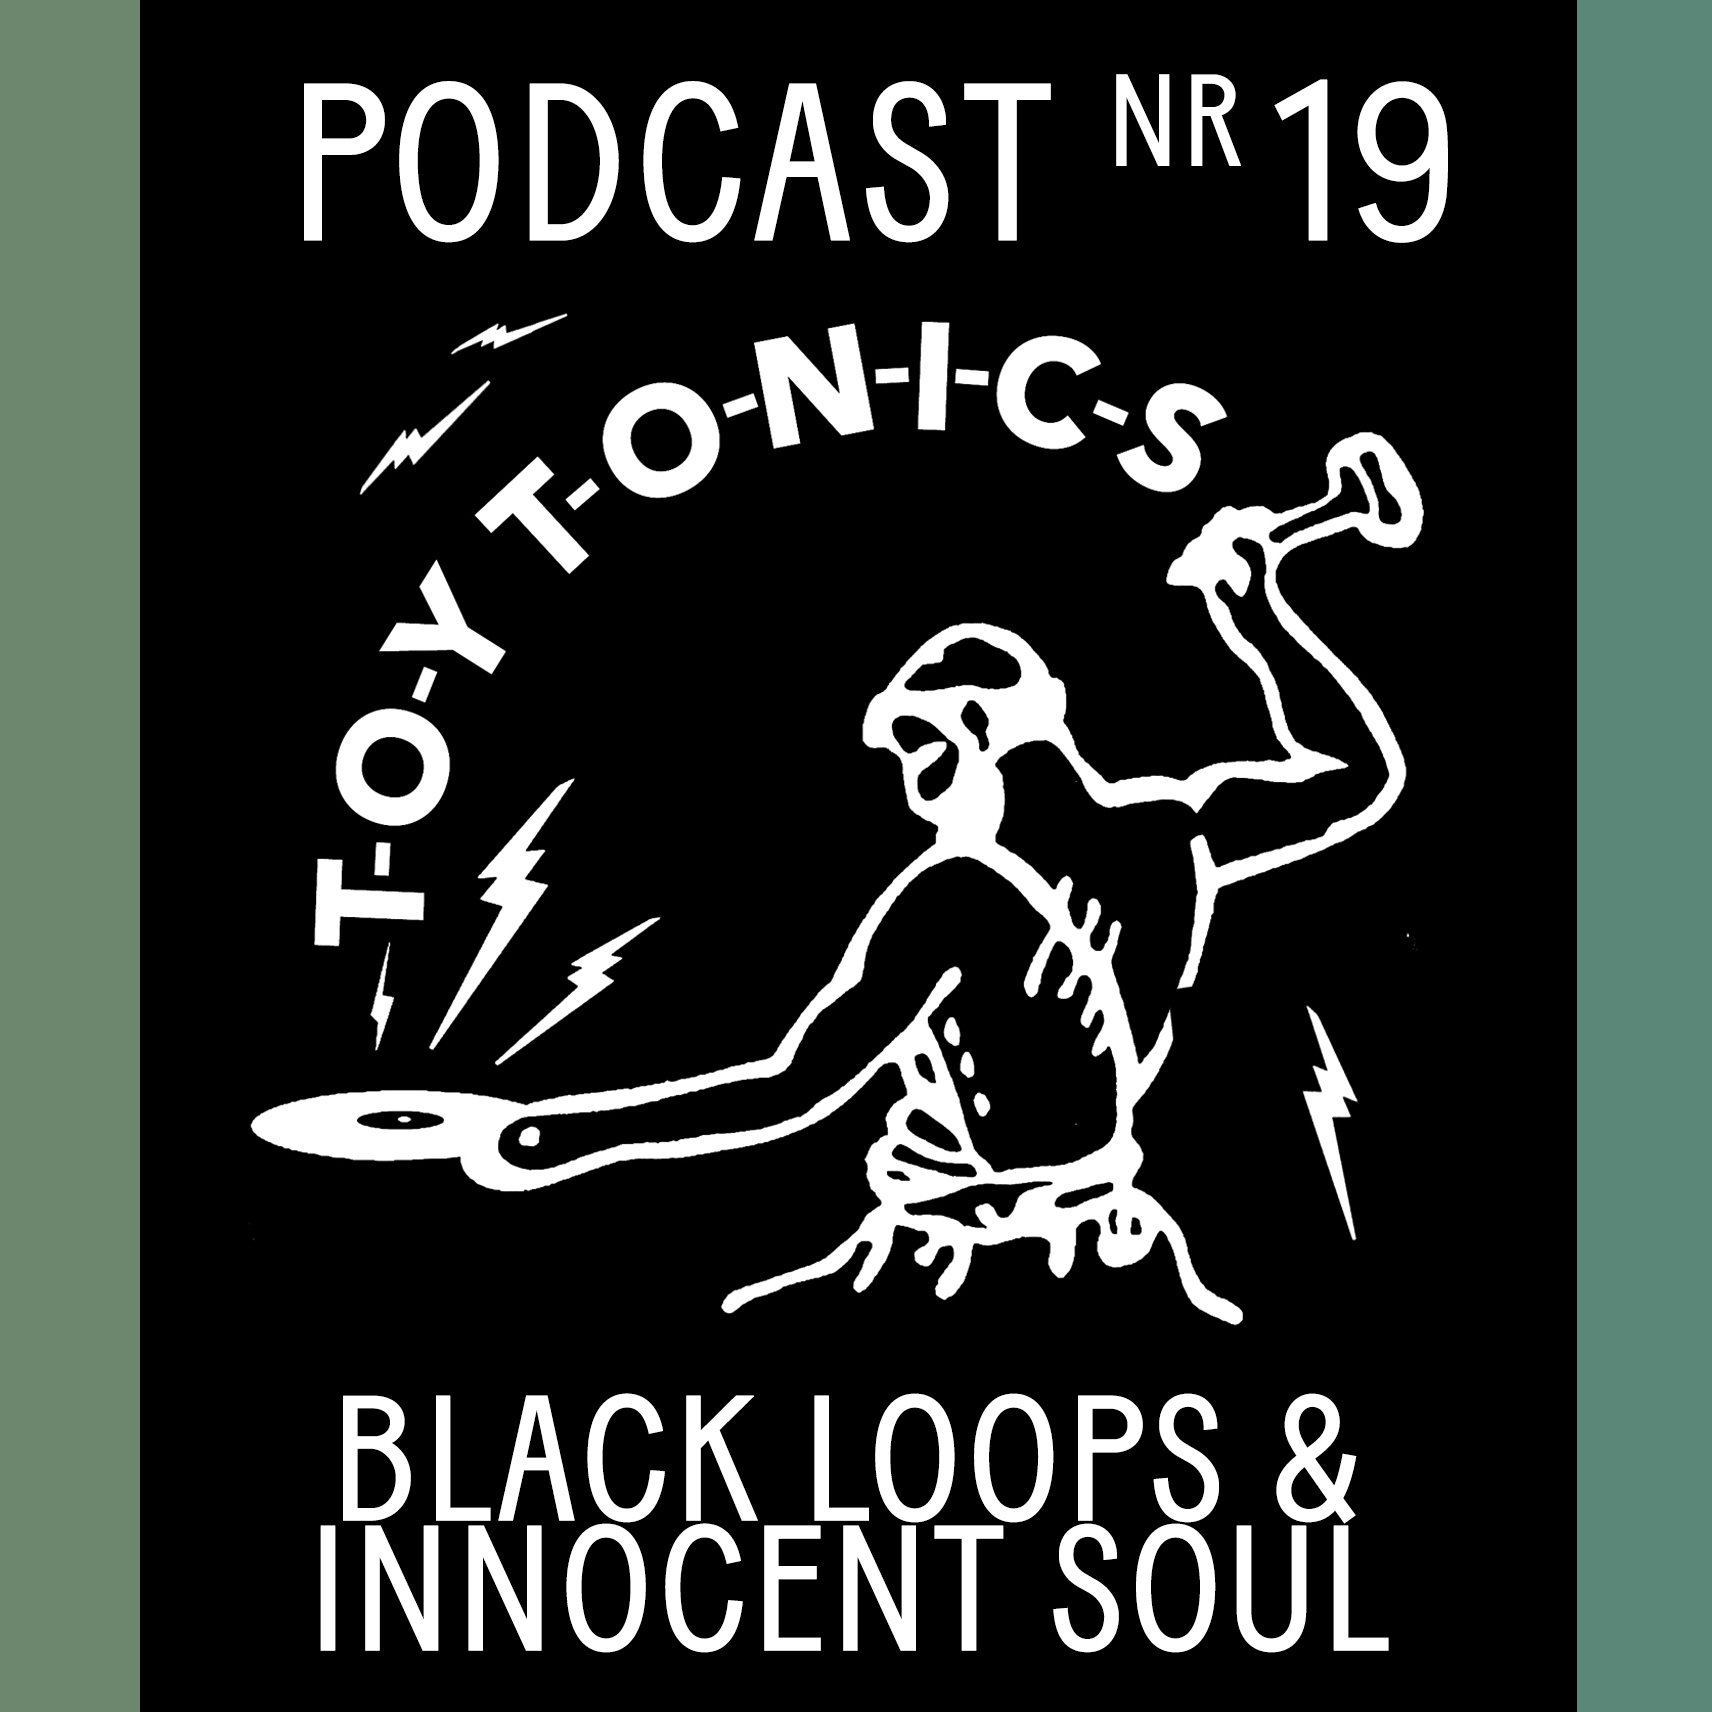 PODCAST NR 19 - Black Loops & Innocent Soul